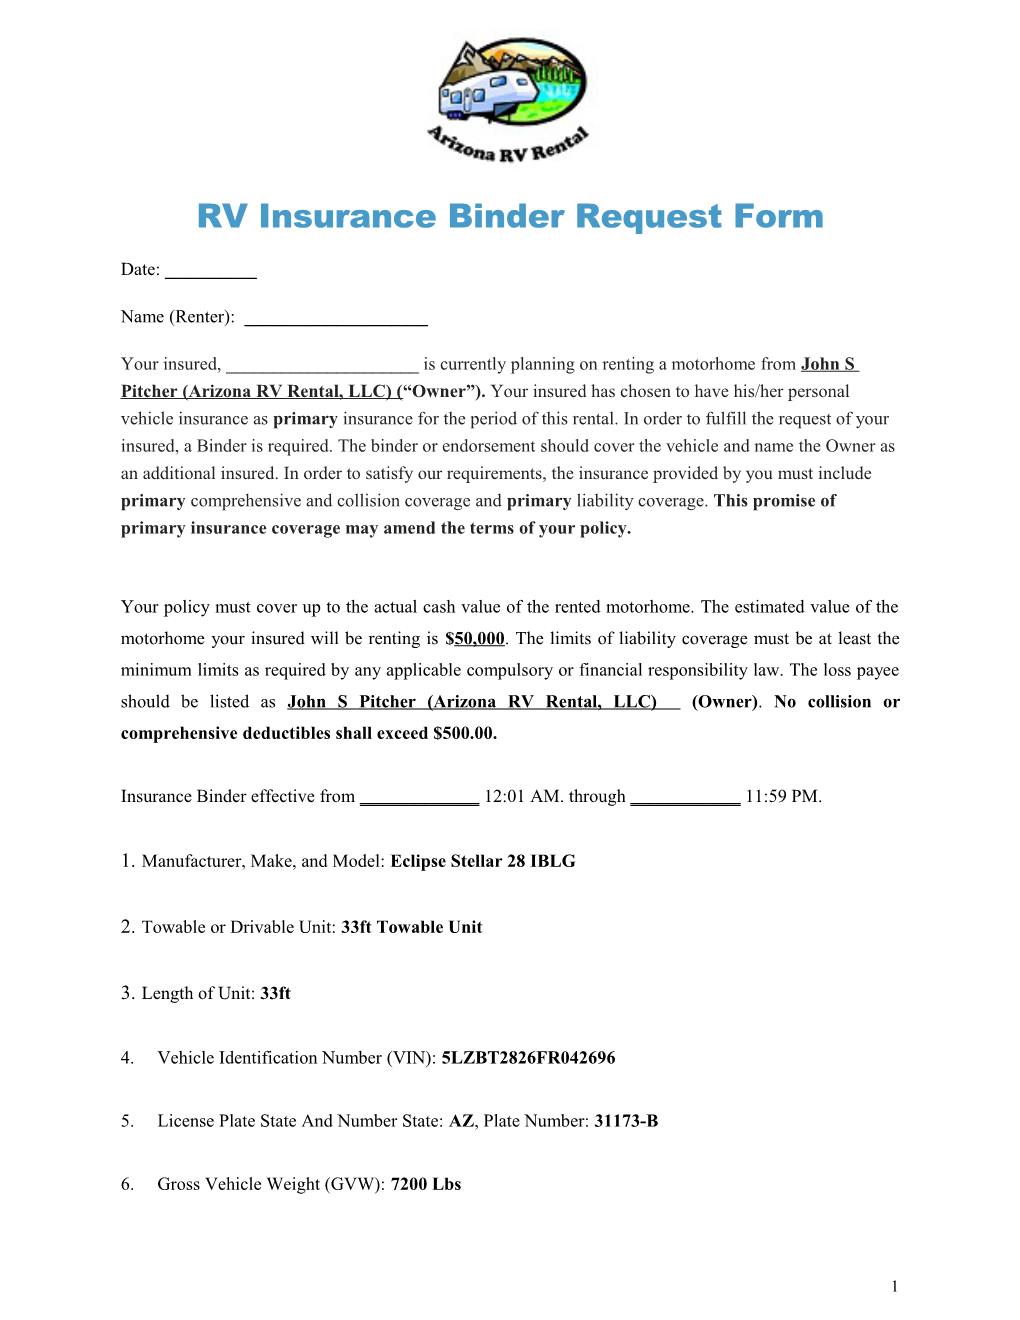 RV Insurance Binder Request Form